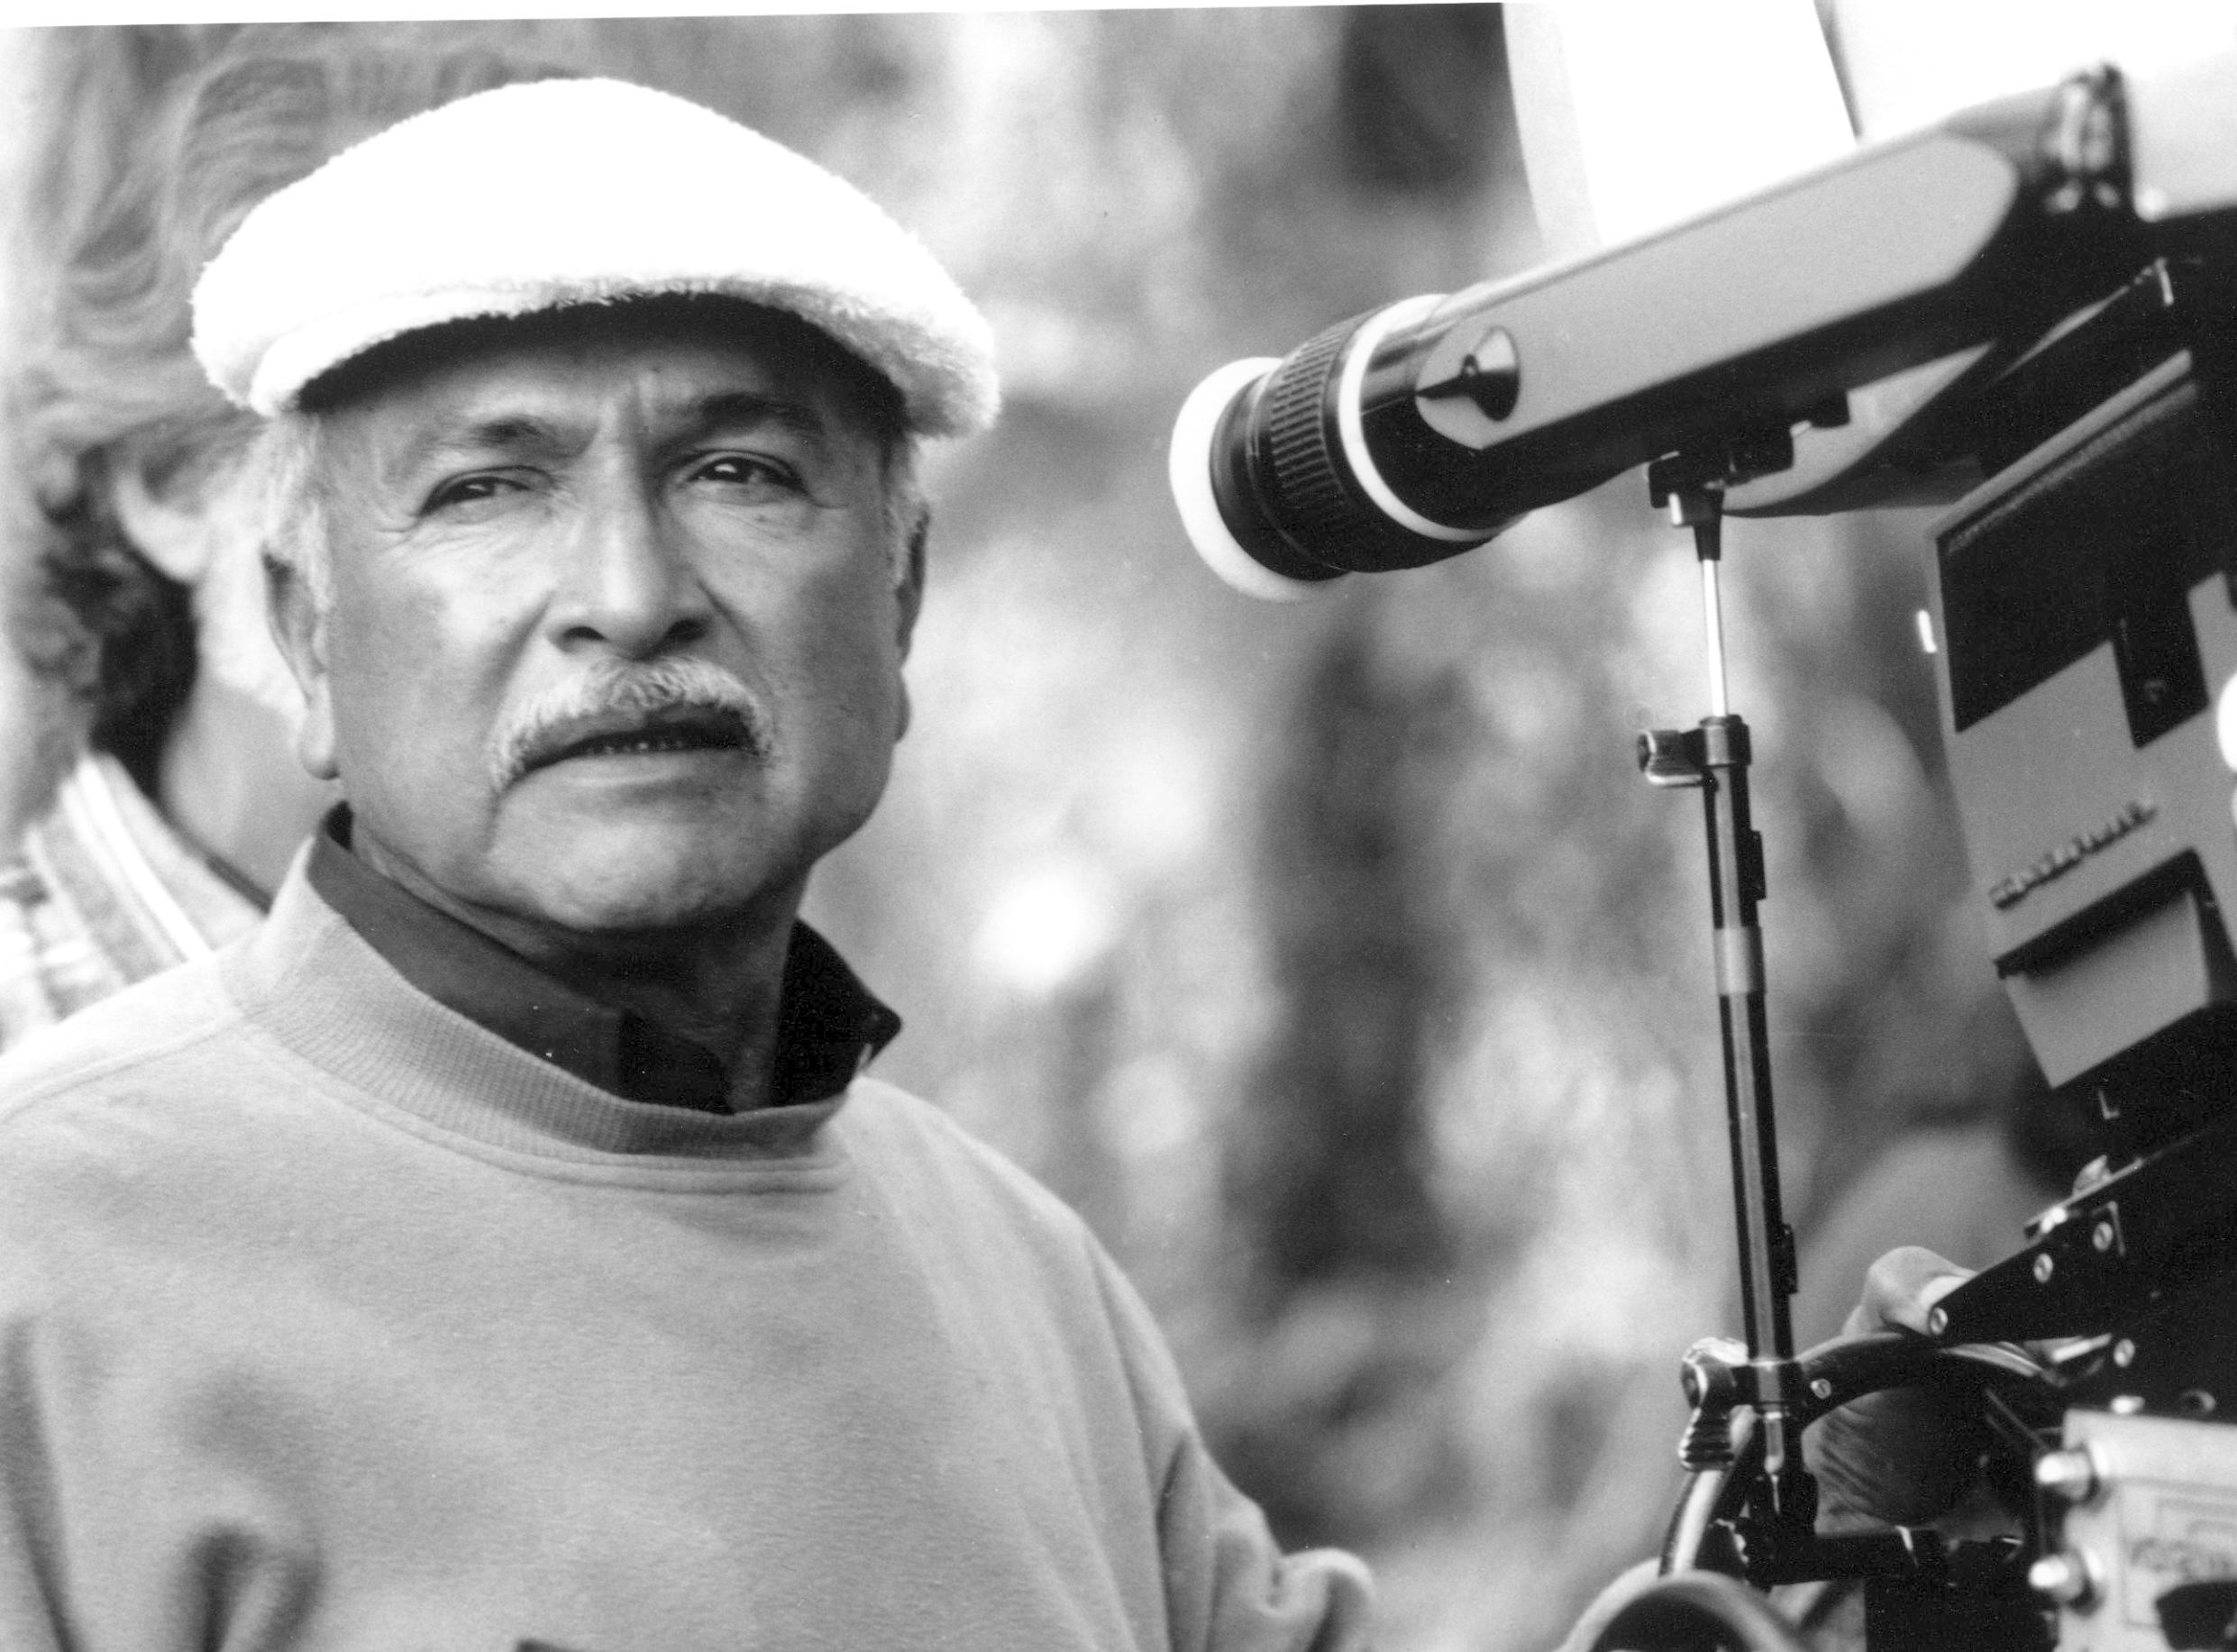 Image of famous cinematographer John A. Alonzo